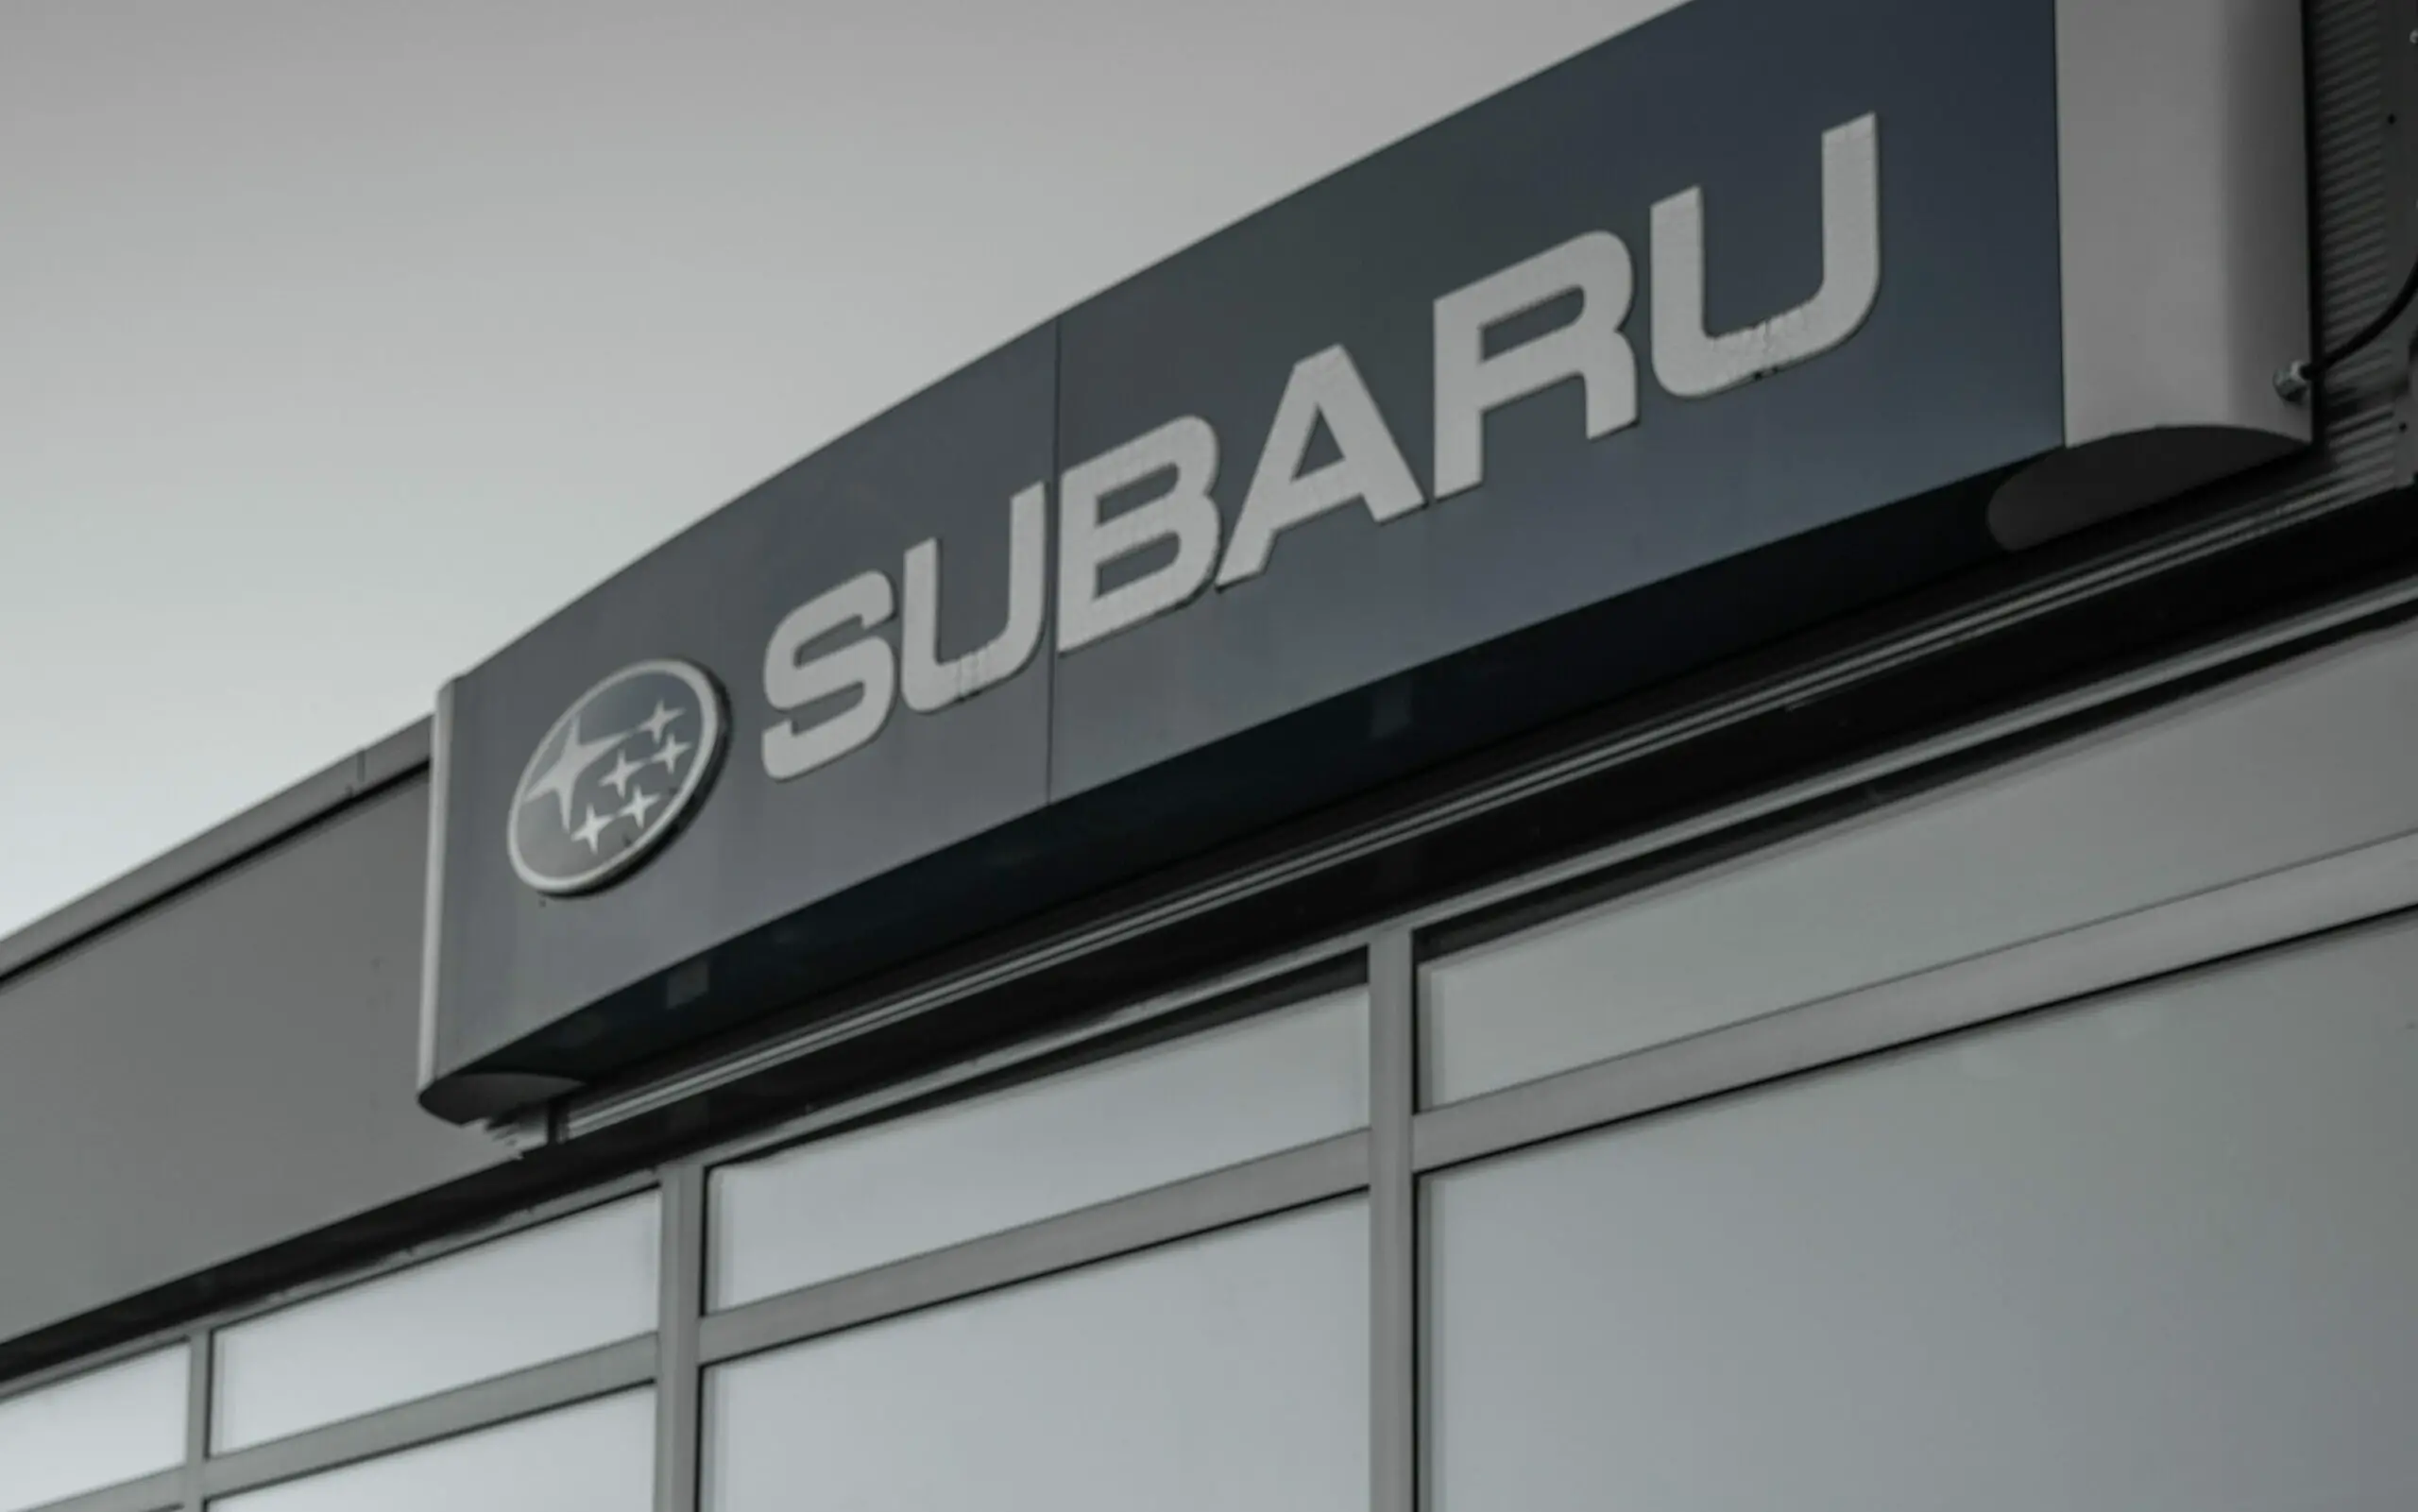 Subaru Mission Statement, Vision & Values Analysis